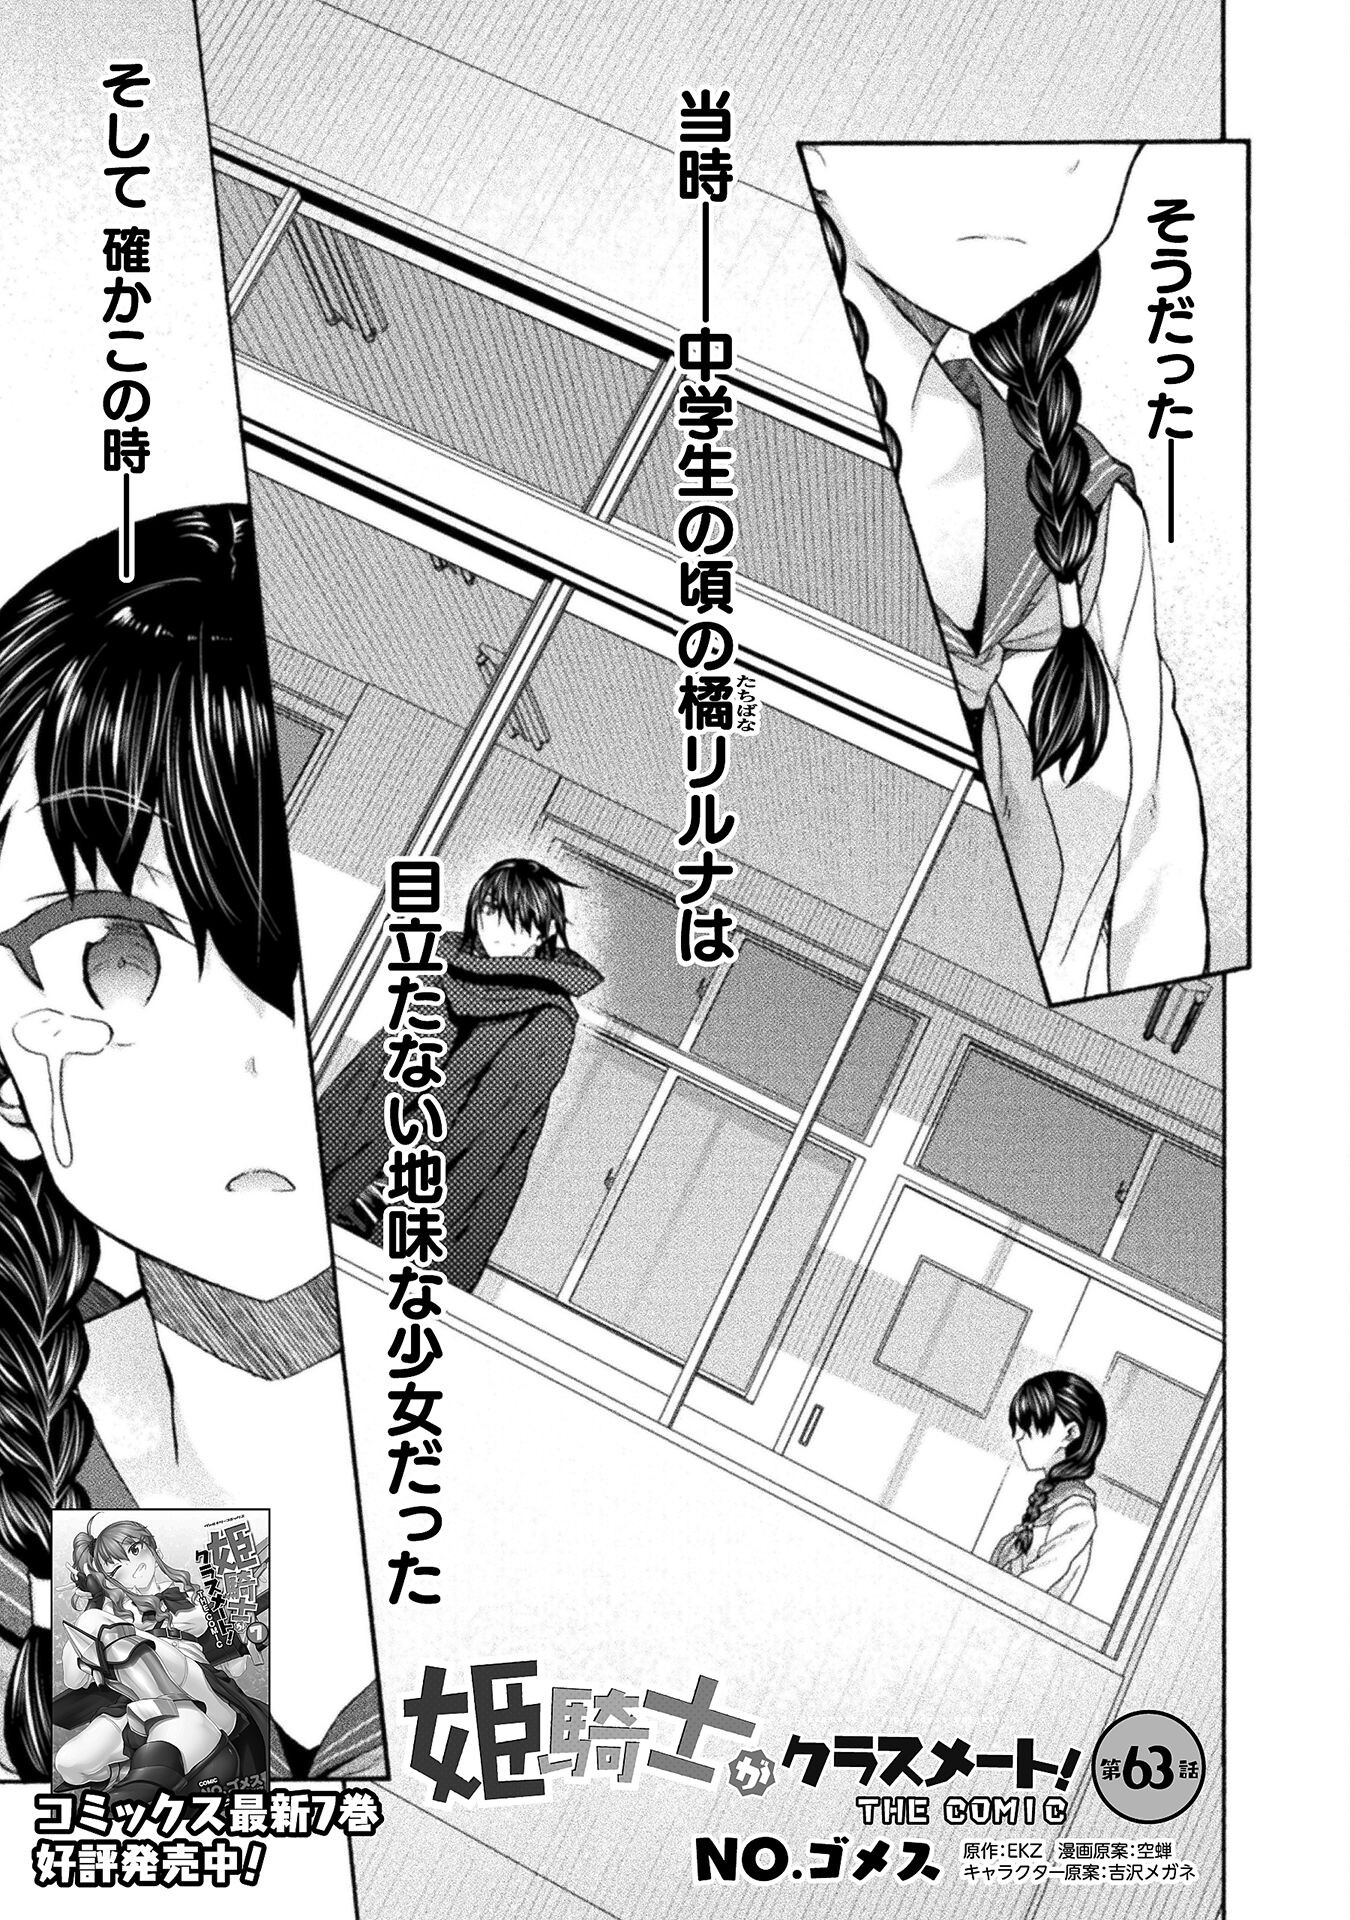 Himekishi ga Classmate! - Chapter 63 - Page 1